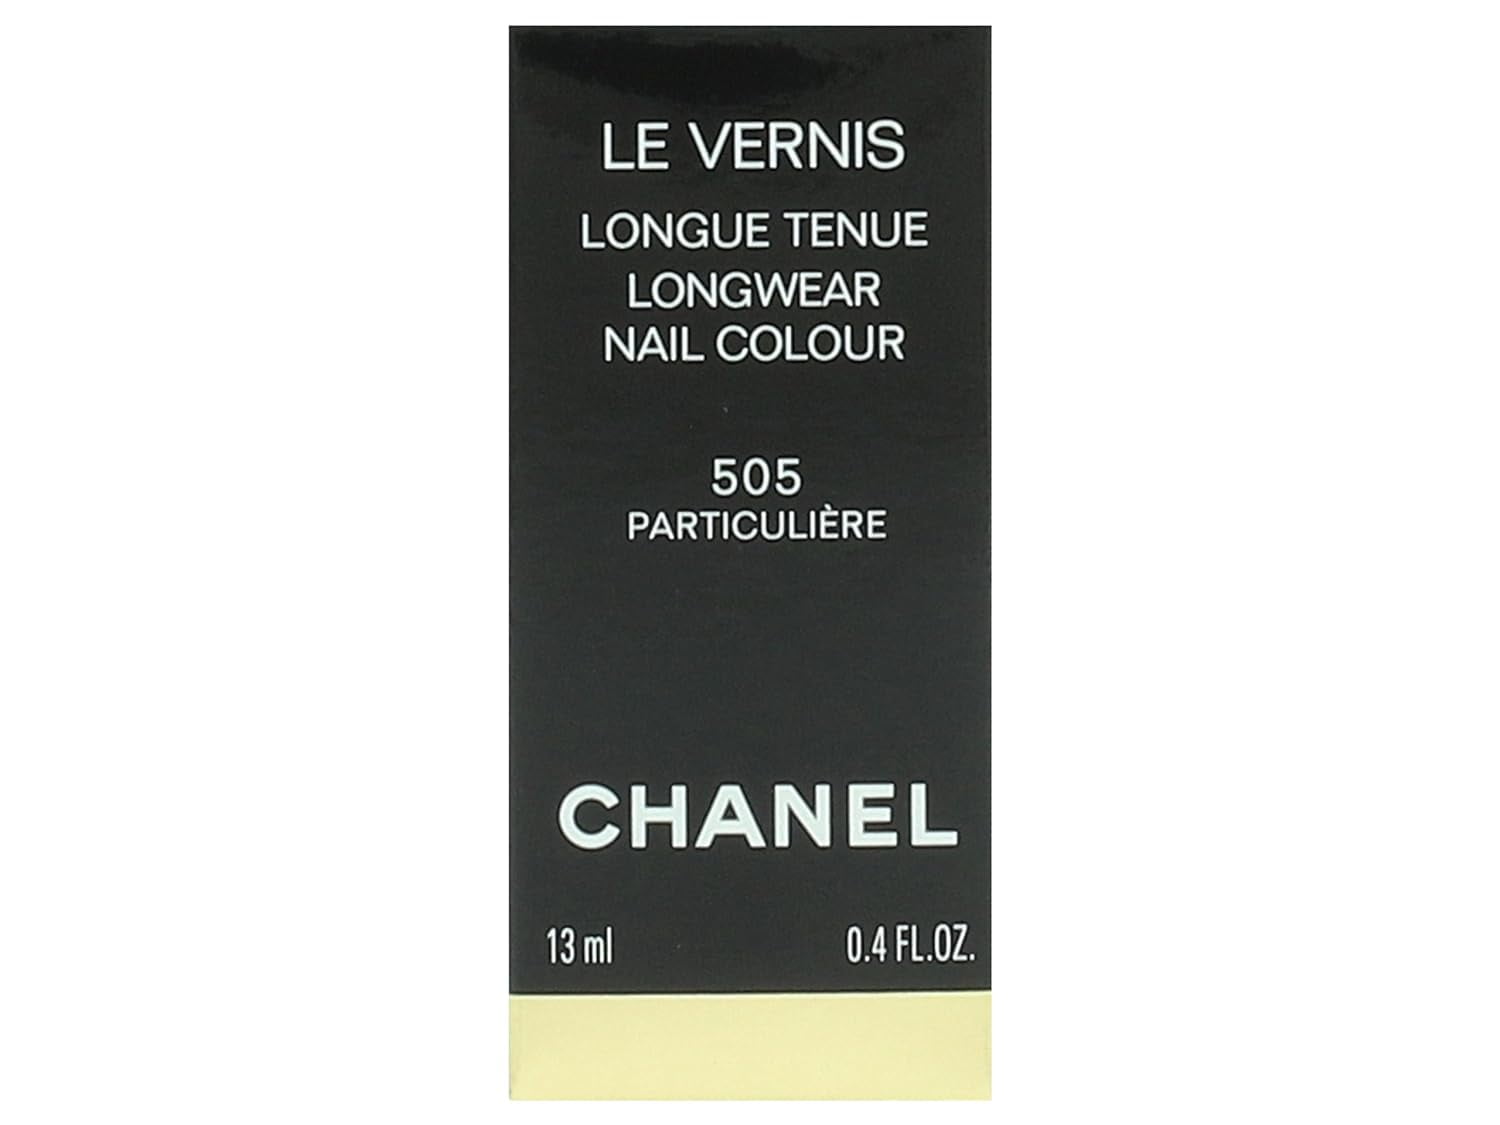 Chanel Le Vernis Longwear Nail Colour - 505 Particuliere 0.4 oz Nail Polish  